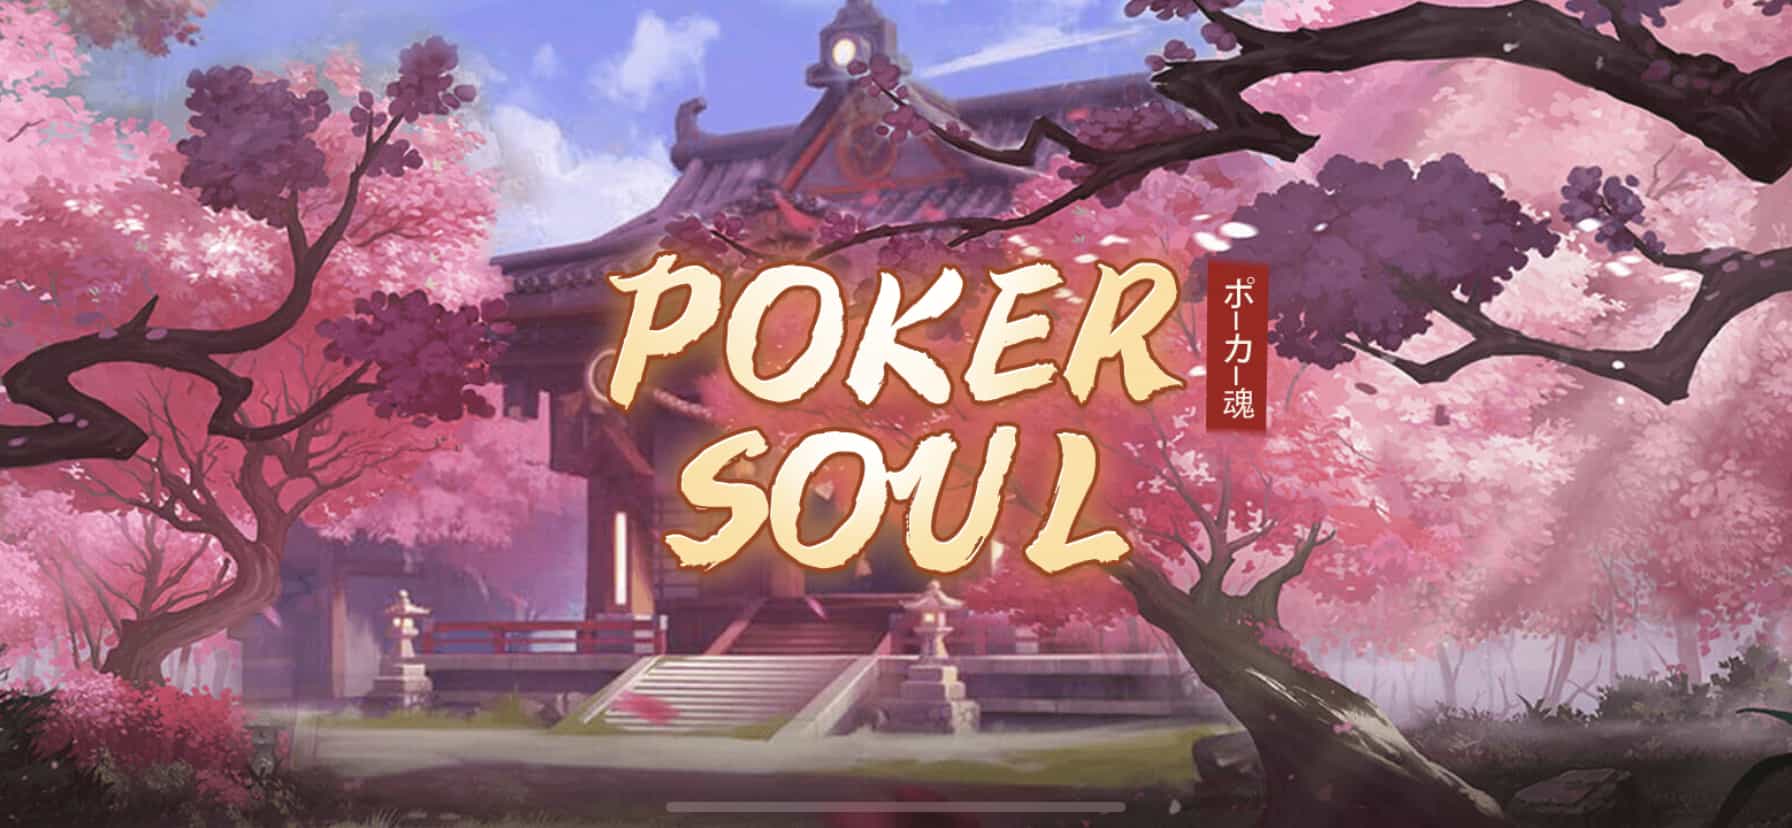 Poker-Soul(ぽかそう)を実際に遊んだレビュー